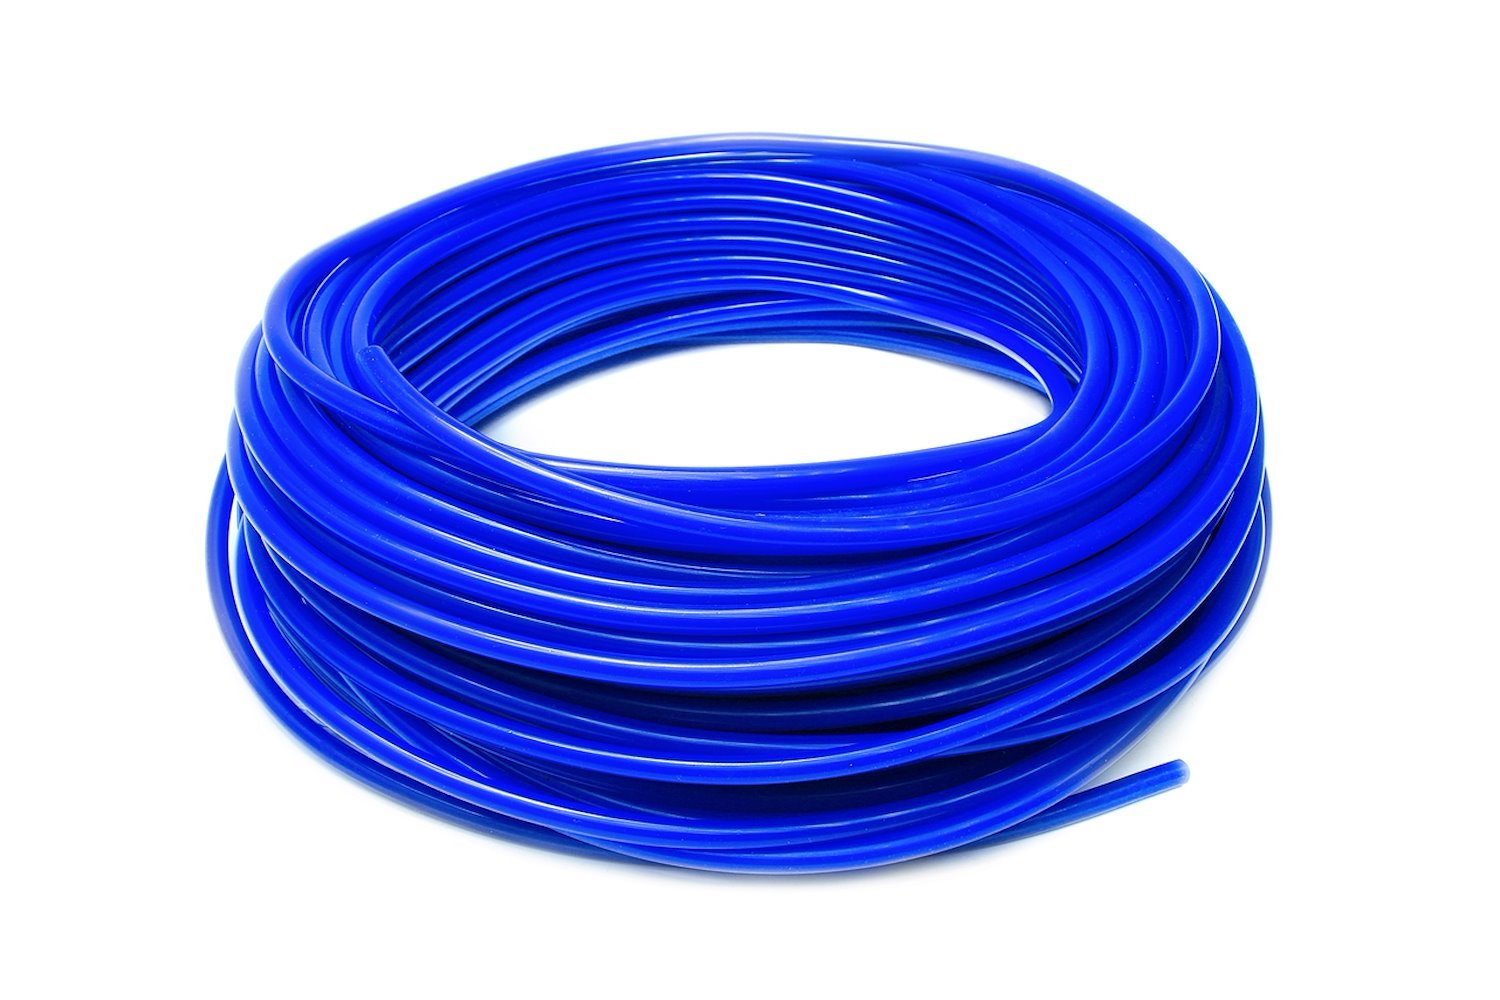 HTSVH6-BLUEx100 High-Temperature Silicone Vacuum Hose Tubing, 1/4 in. ID, 100 ft. Roll, Blue